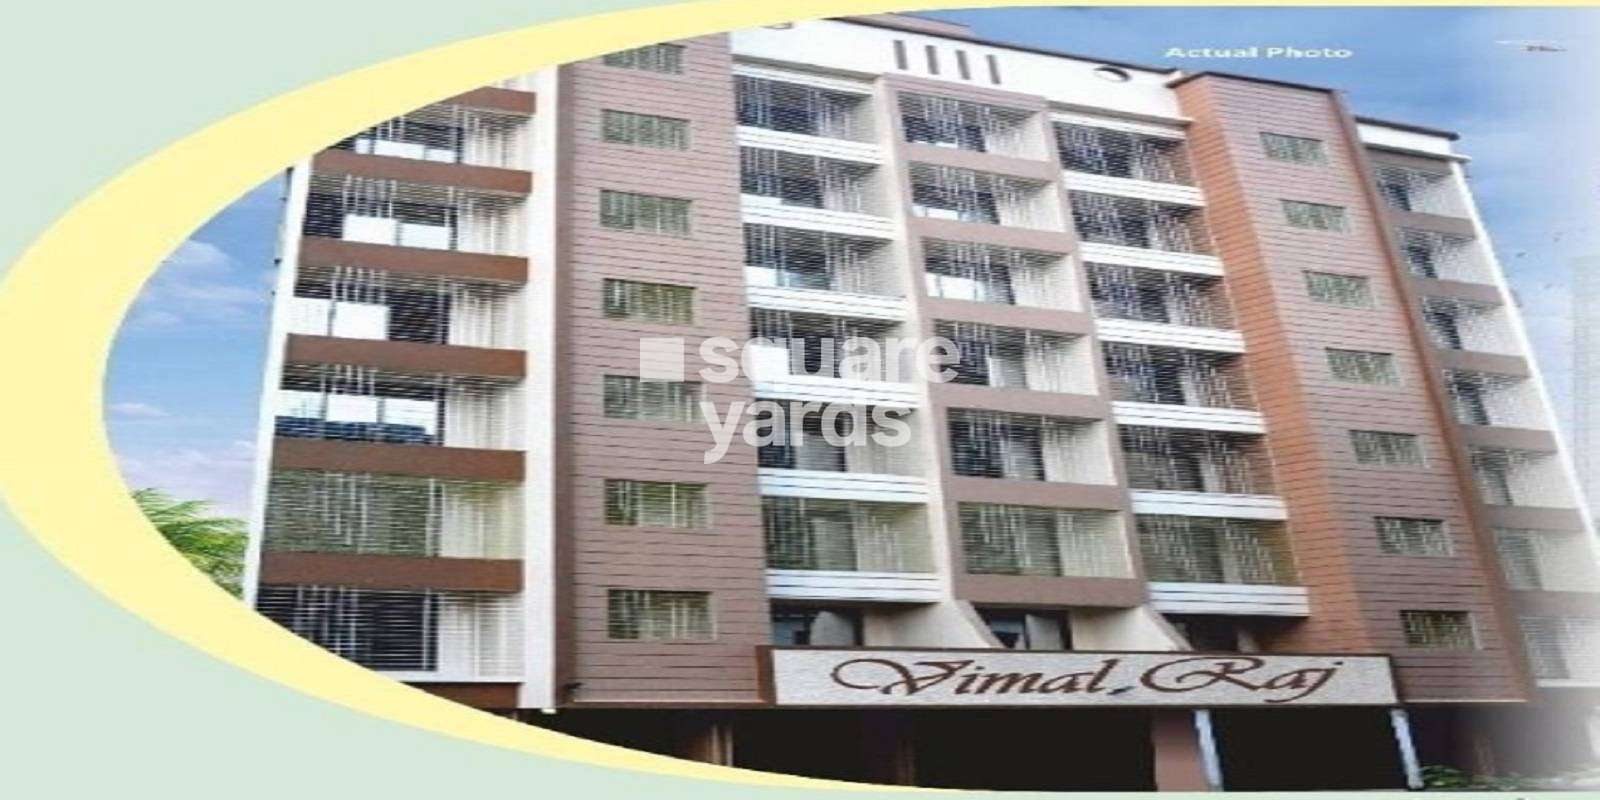 Vimal Raj Apartment Cover Image